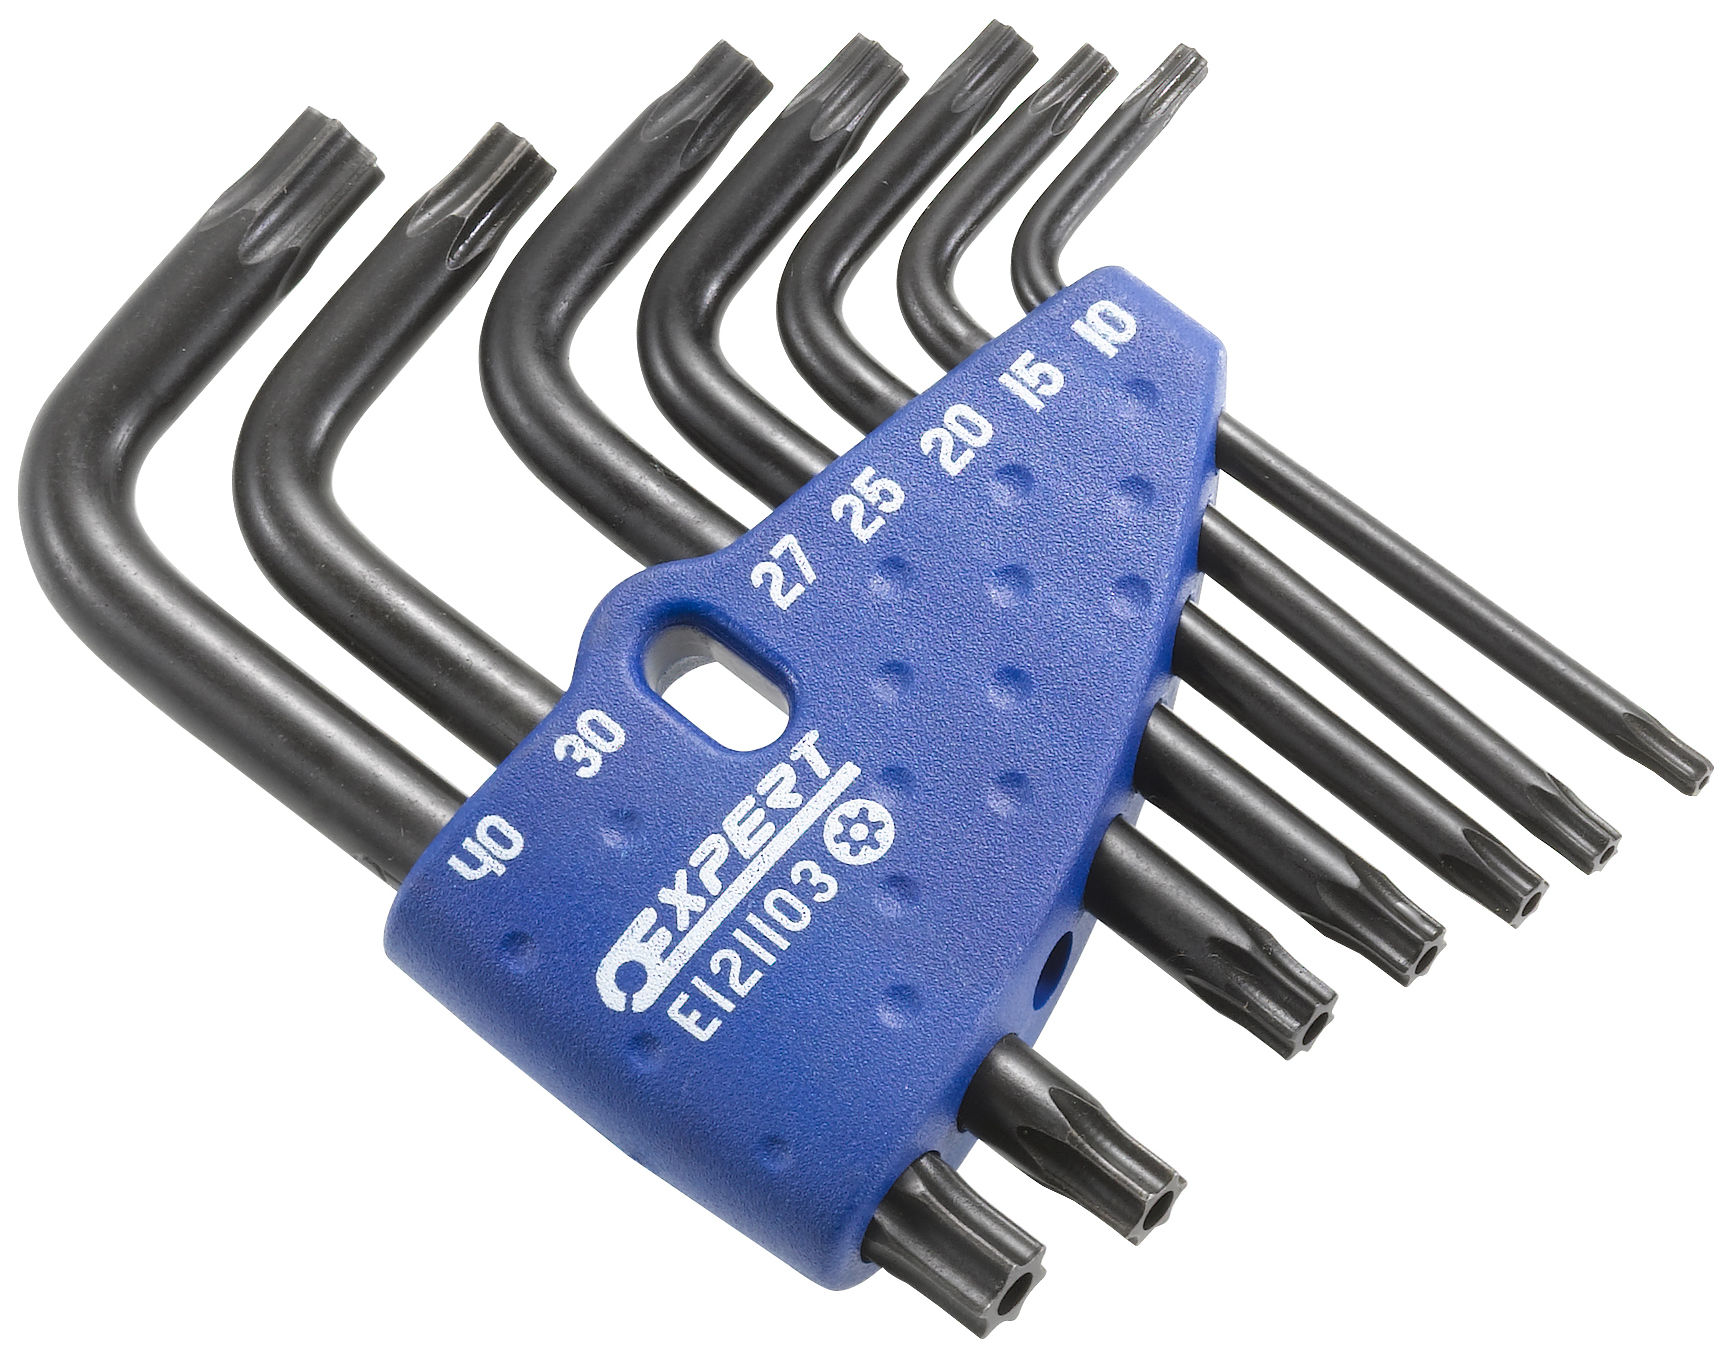 1.E121103 Set van 7 resistorx® inbussleutels op plastic houder